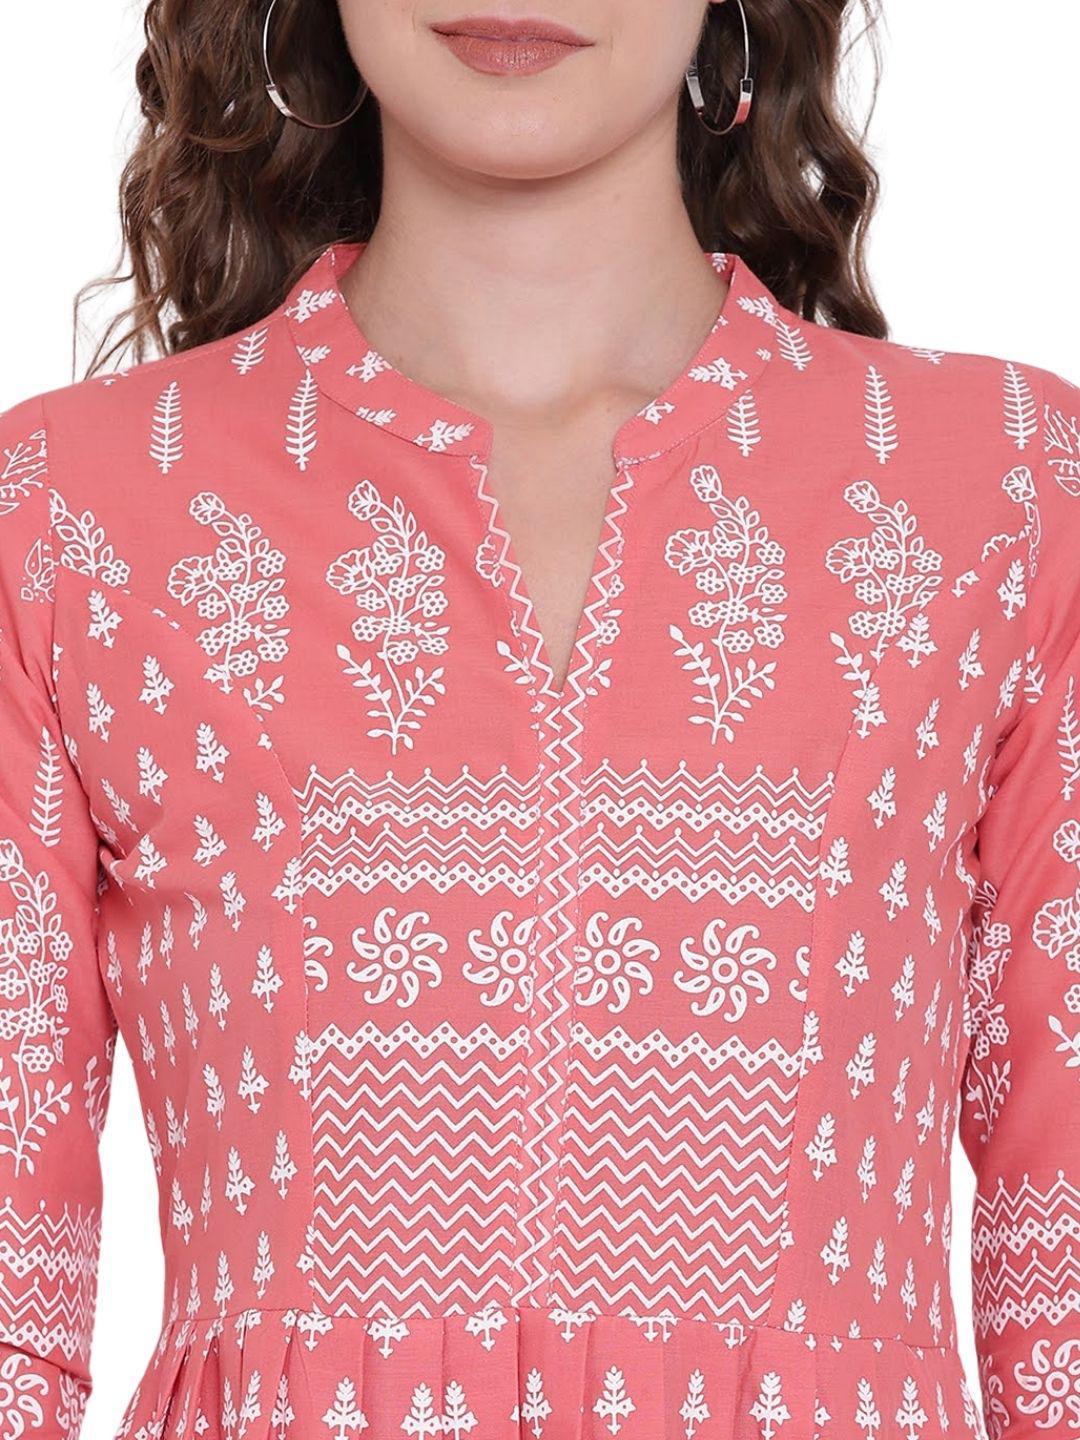 pink-a-line-printed-cotton-dress-10004003PK, Women Indian Ethnic Clothing, Cotton Dress